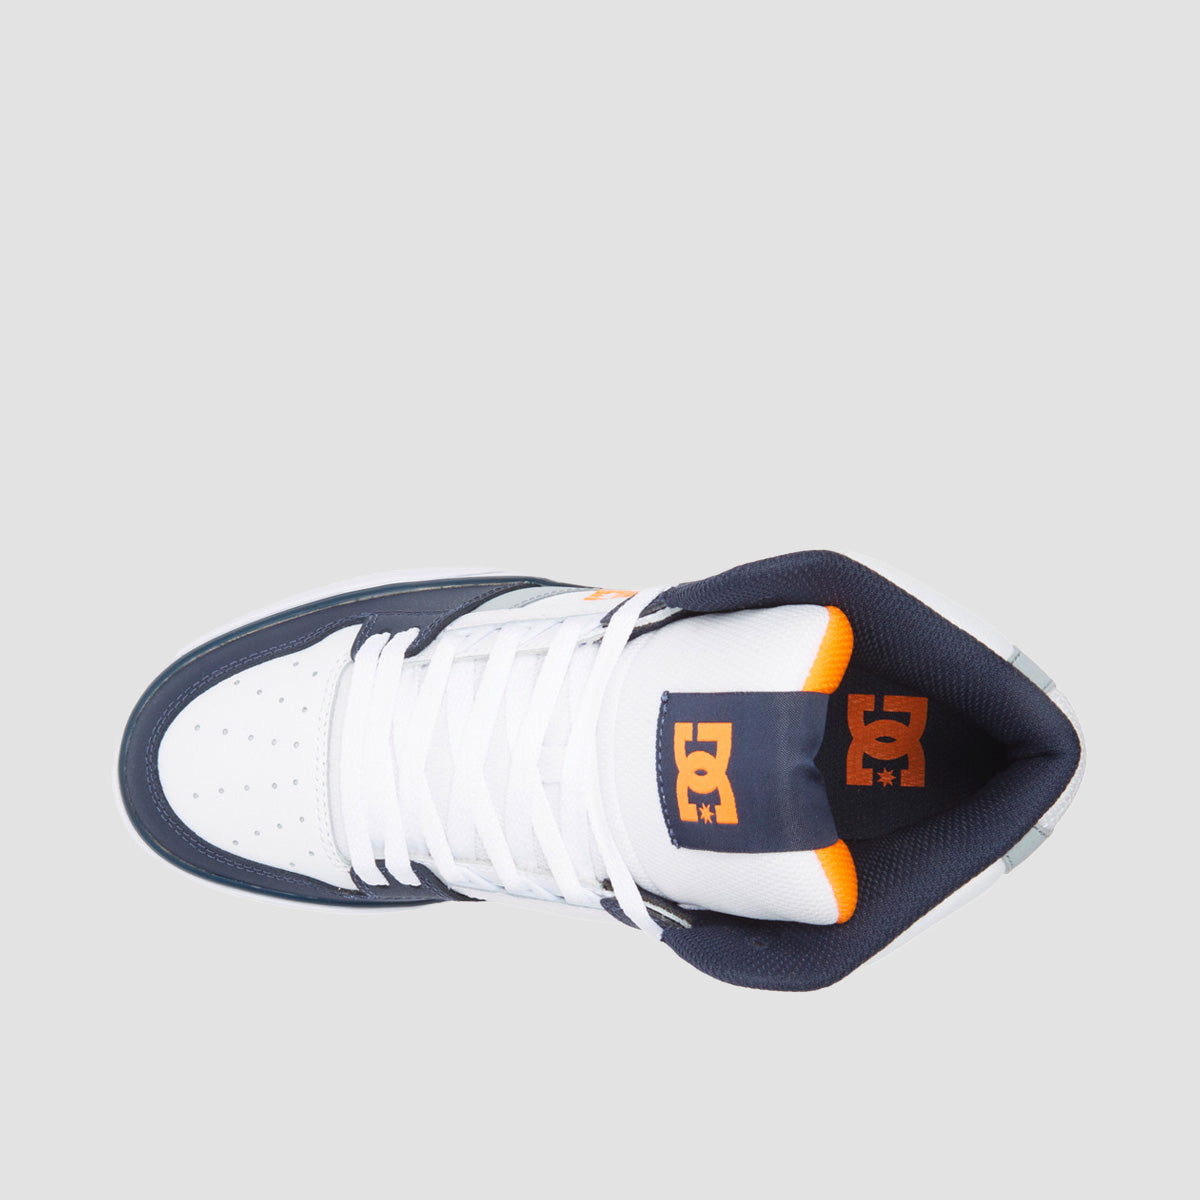 DC Pure HT WC Shoes - White/Grey/Orange